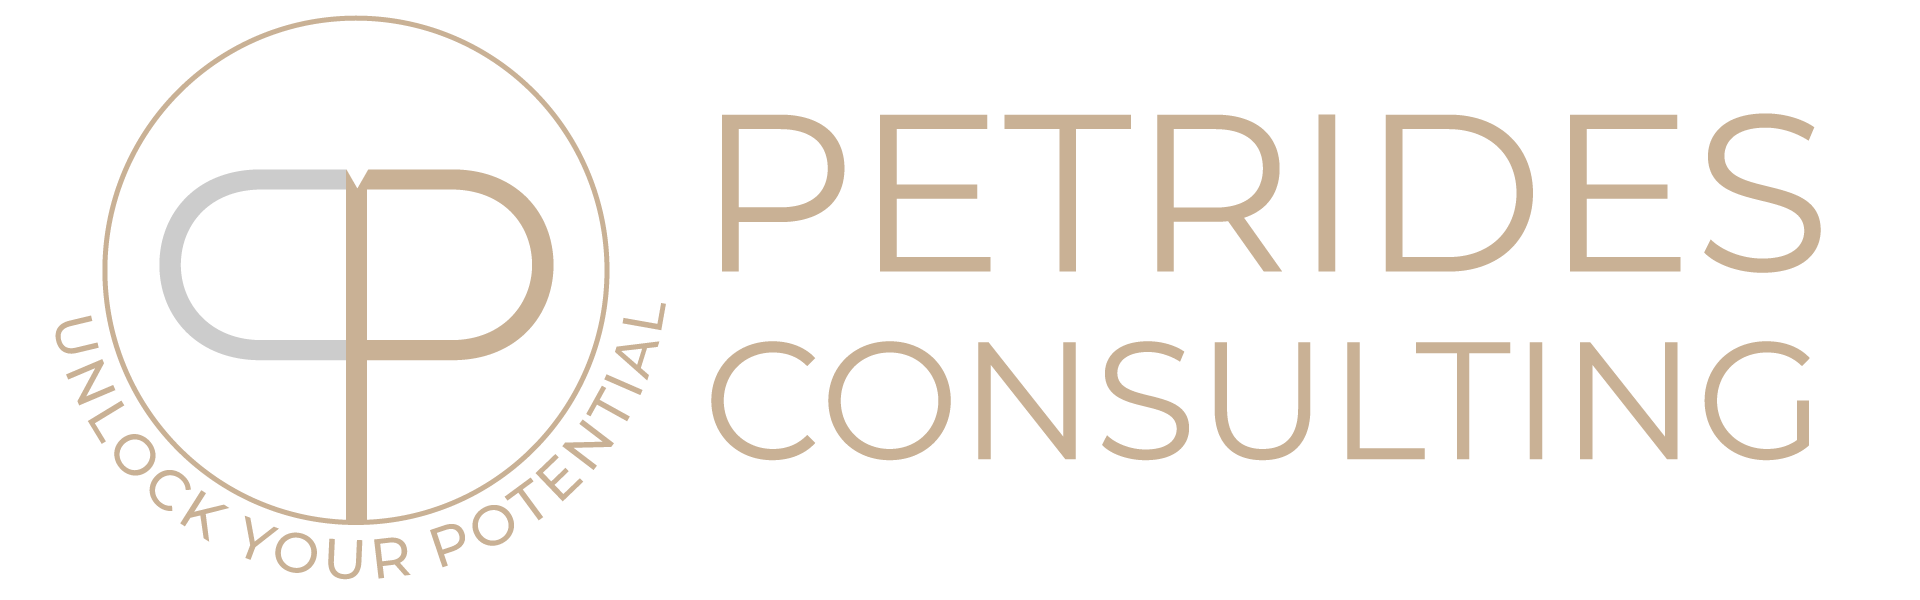 Petrides Consulting